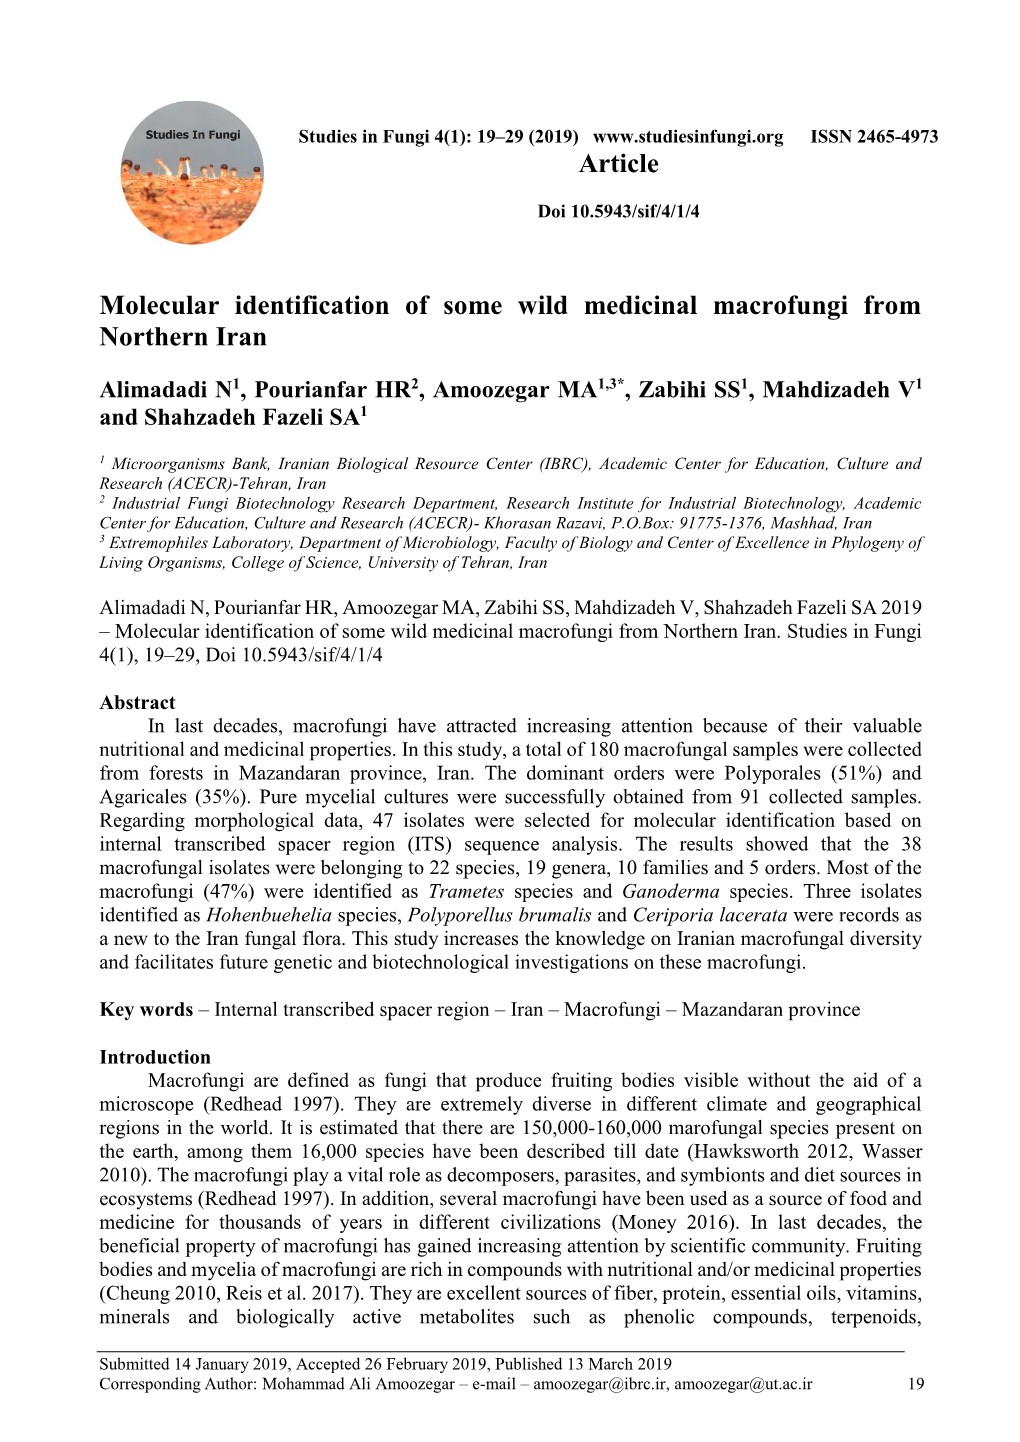 Molecular Identification of Some Wild Medicinal Macrofungi from Northern Iran